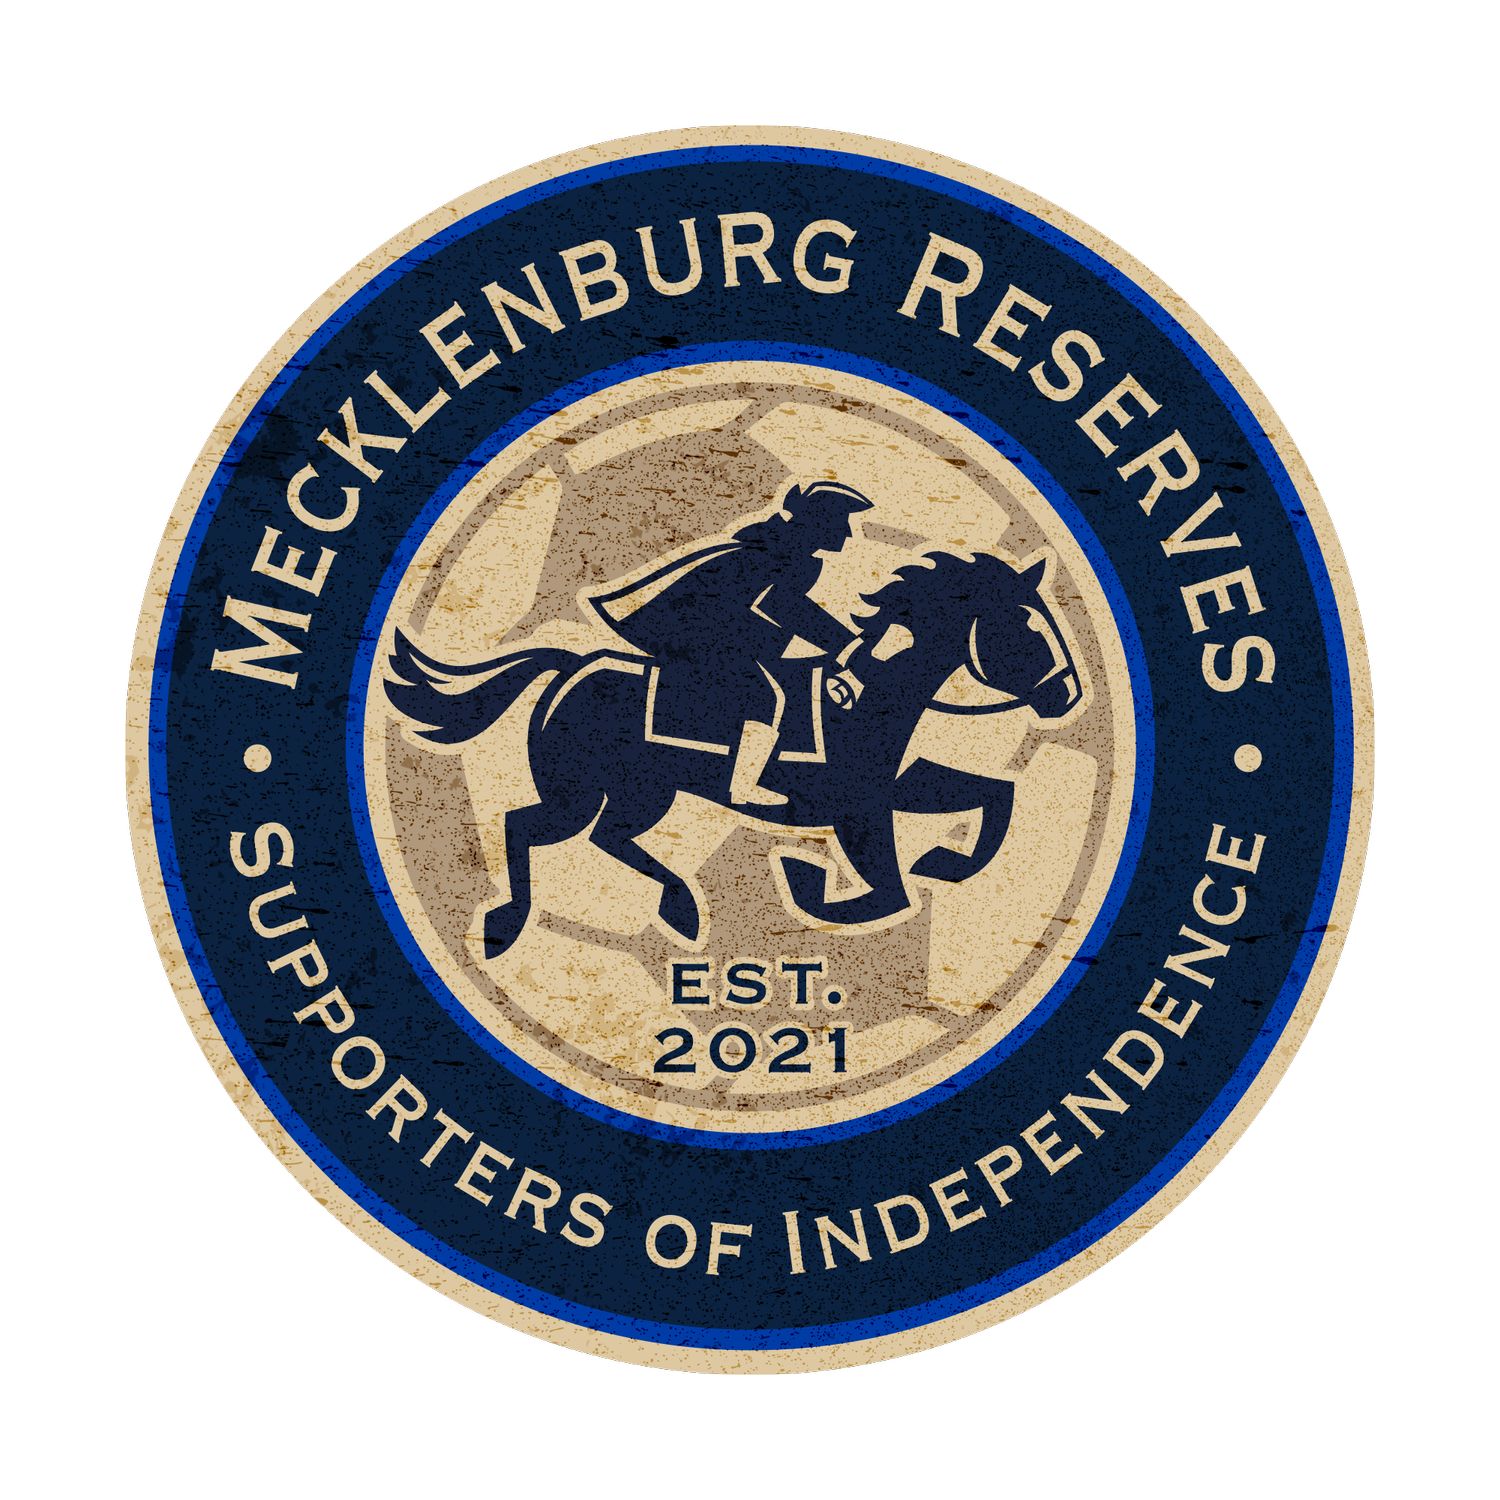 The Mecklenburg Reserves